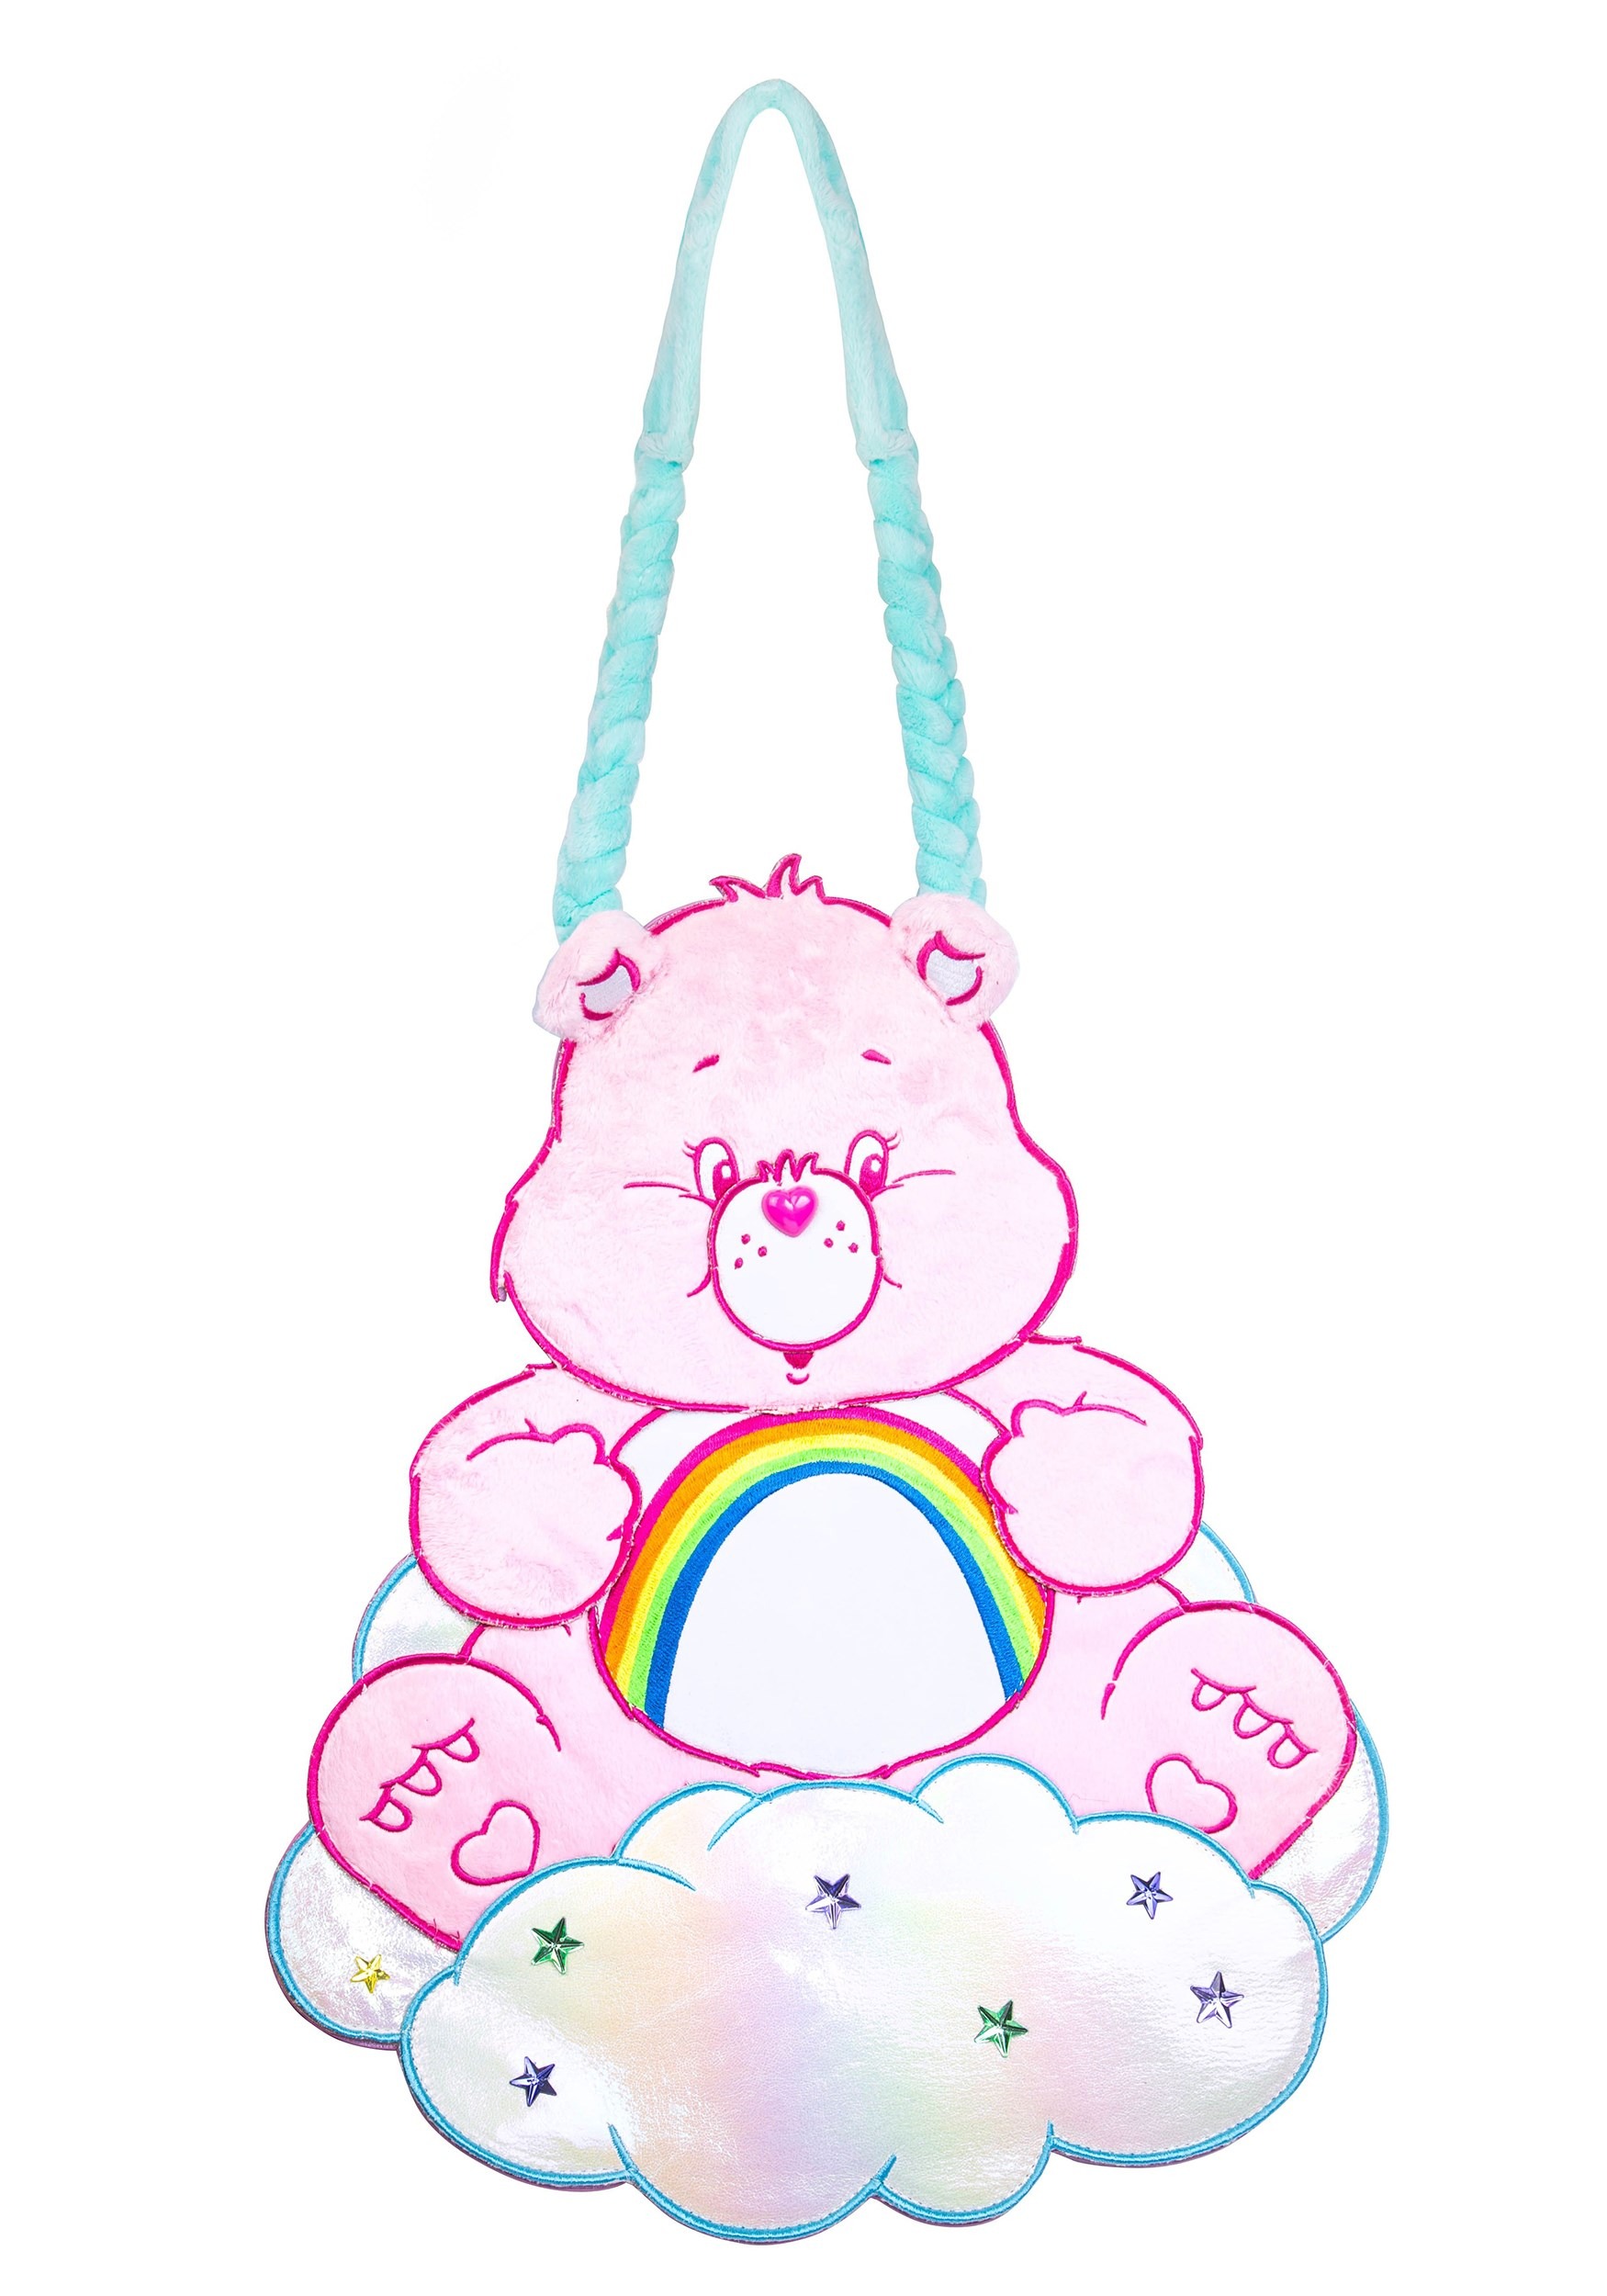 Care Bears Irregular Choice Full of Cheer Pink Crossbody Bag